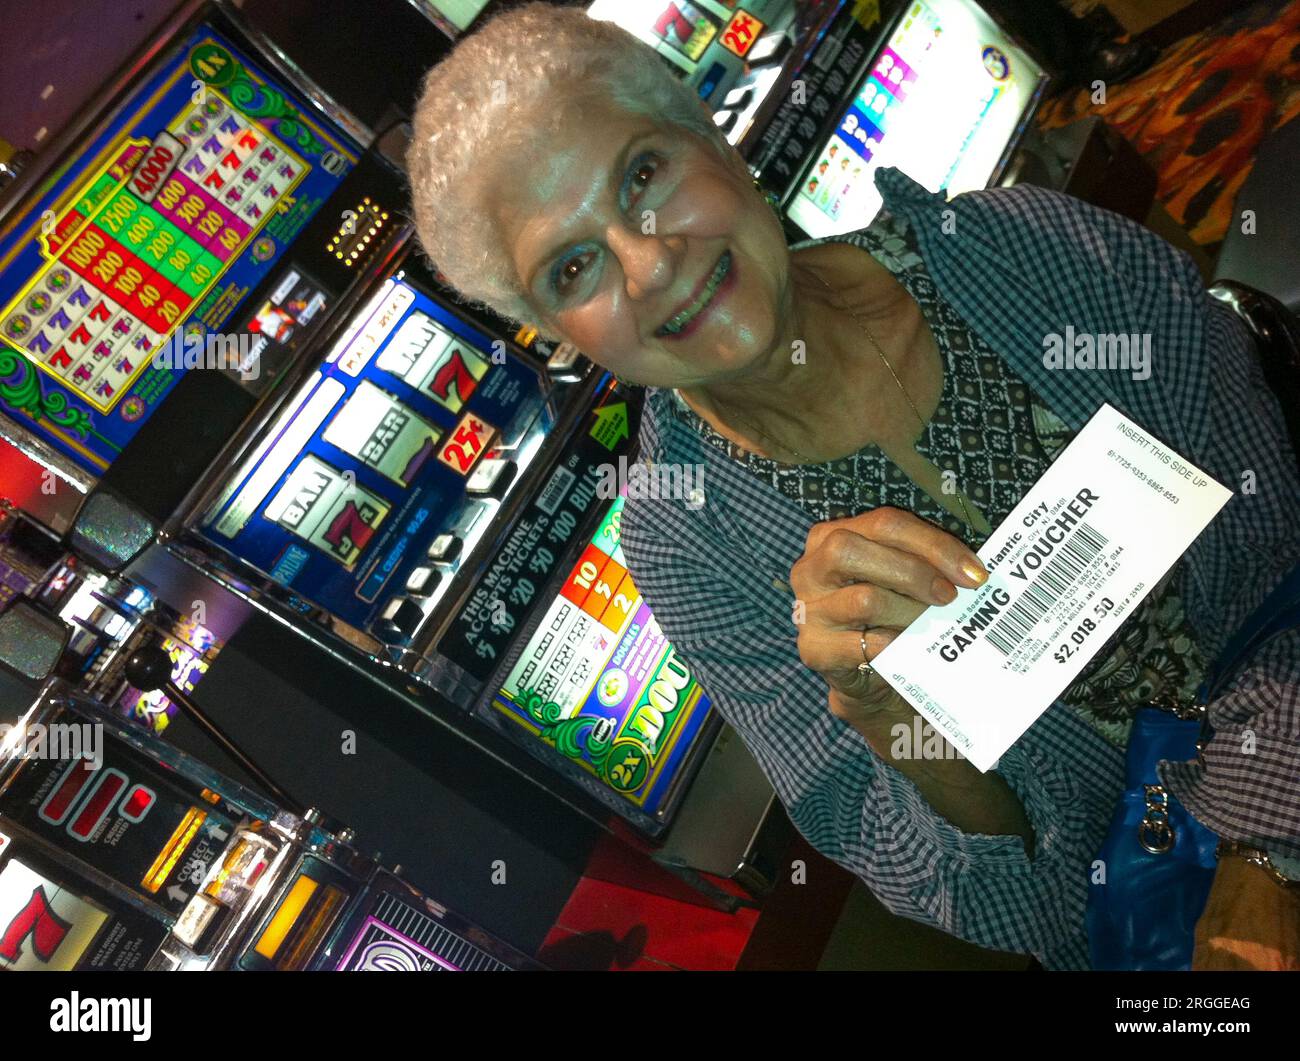 Proud winner shows her gaming voucher. Stock Photo